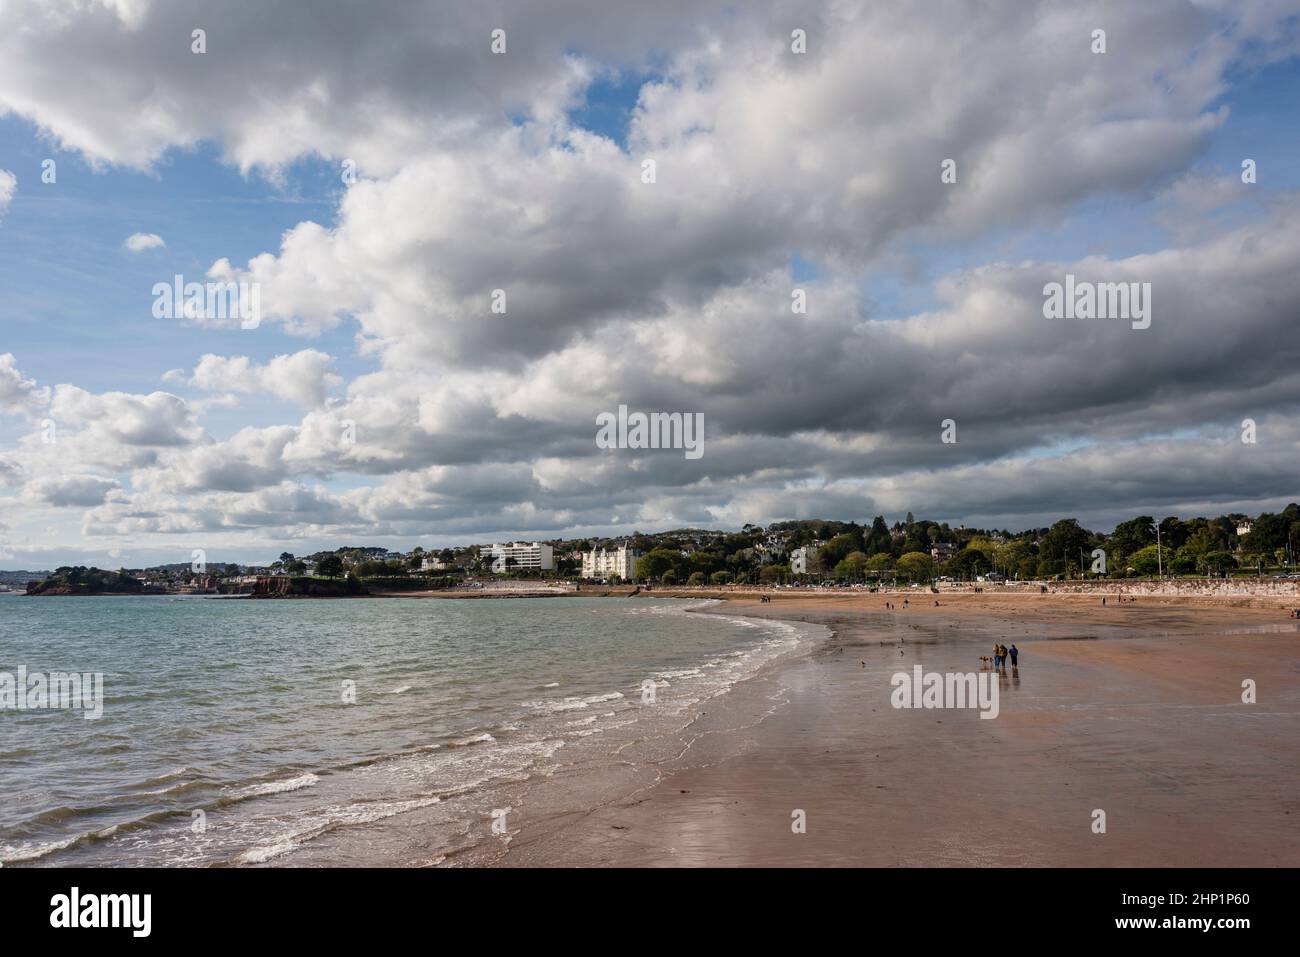 View of people on beach, nice weather, Torquay Seafront, Devon, UK Stock Photo